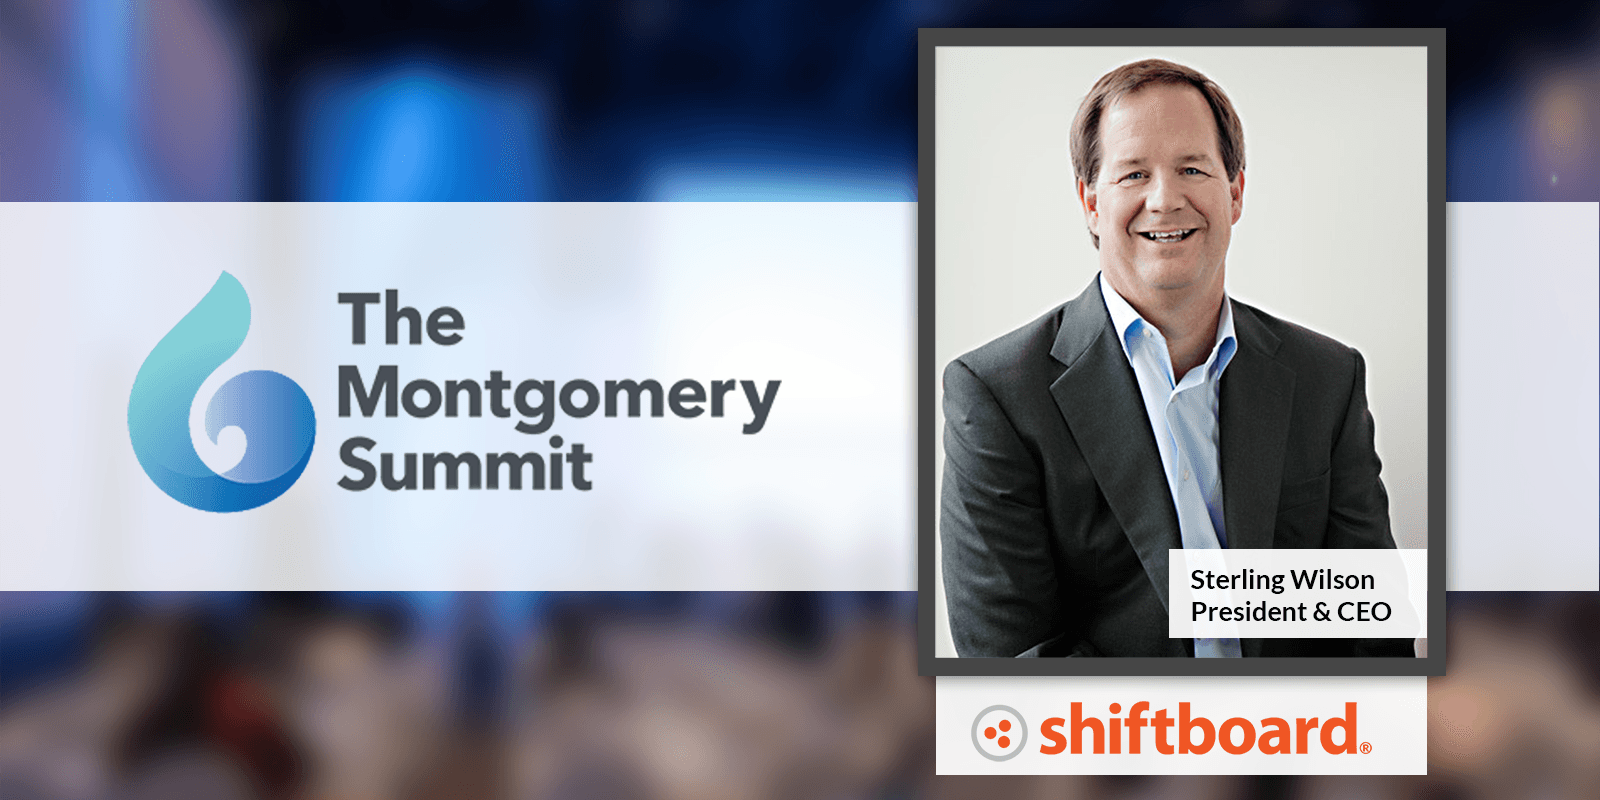 Shiftboard to Present at The Montgomery Summit